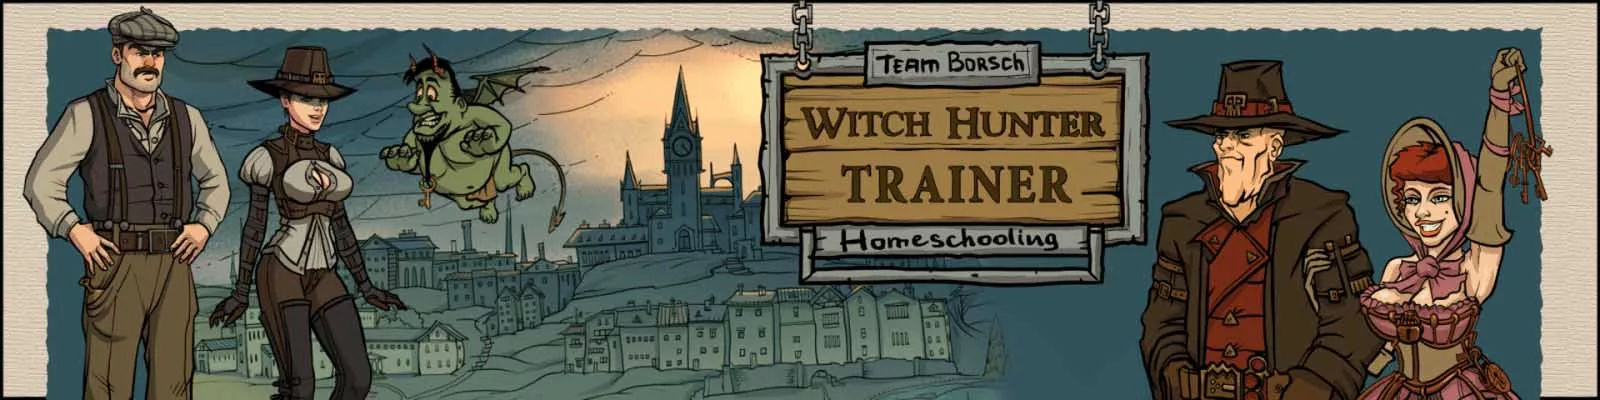 Witch Hunter Təlimçi 3d yetkin oyun